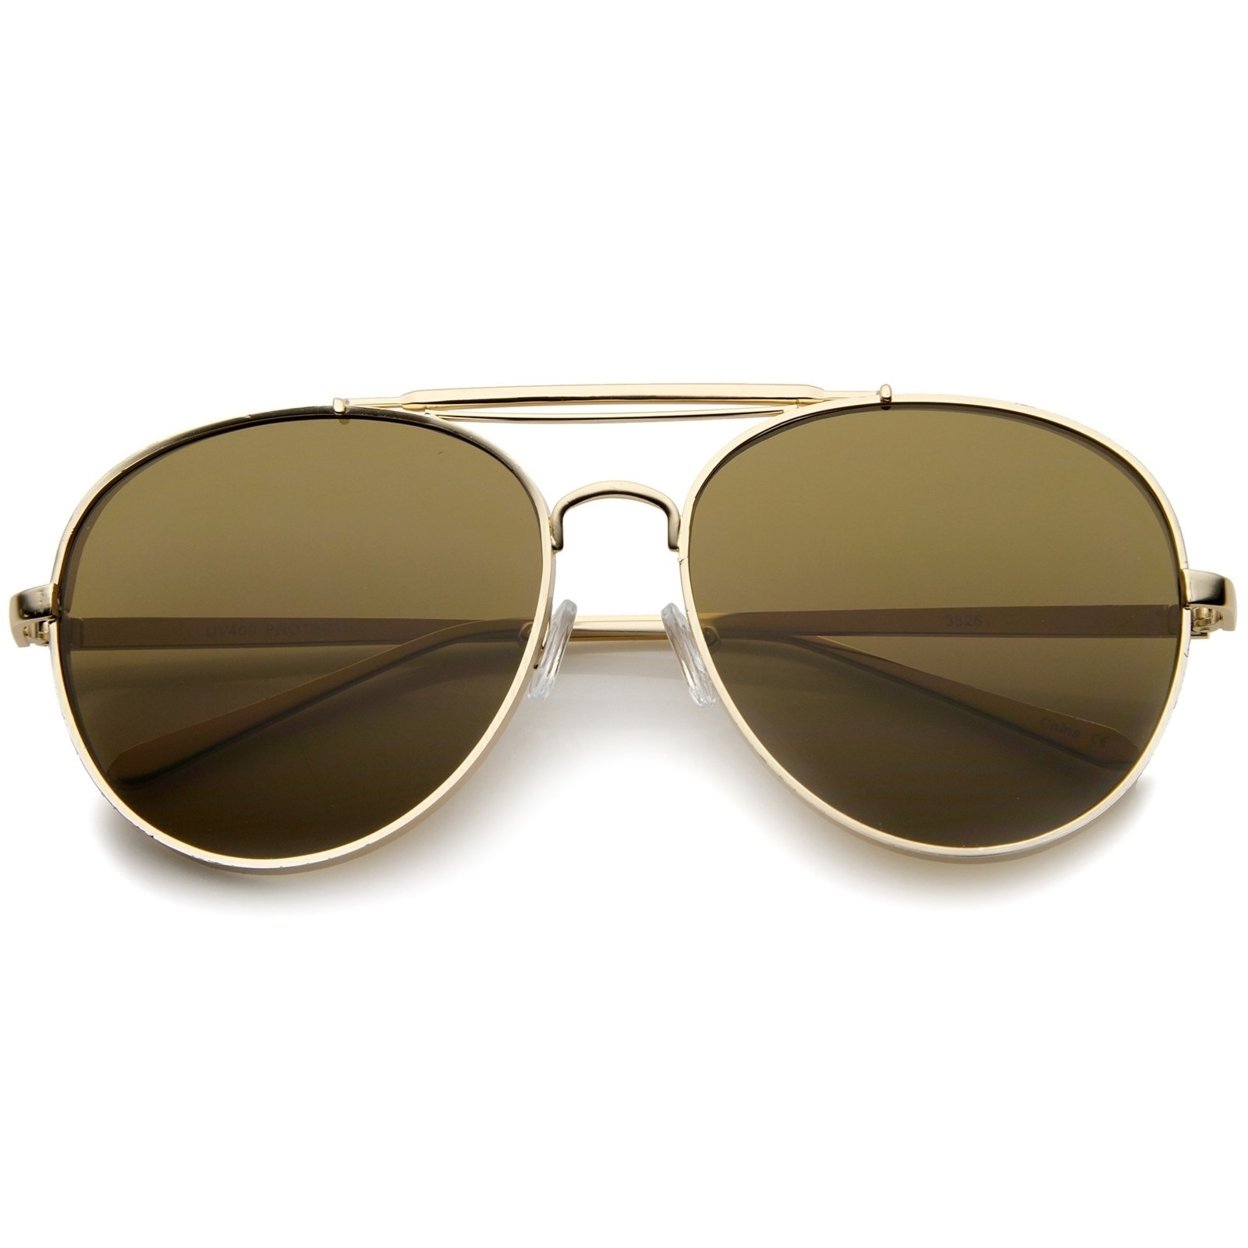 Modern Fashion Flat Lens Full Metal Side Cover Frame Double Bridged Aviator Sunglasses - Gold / Green